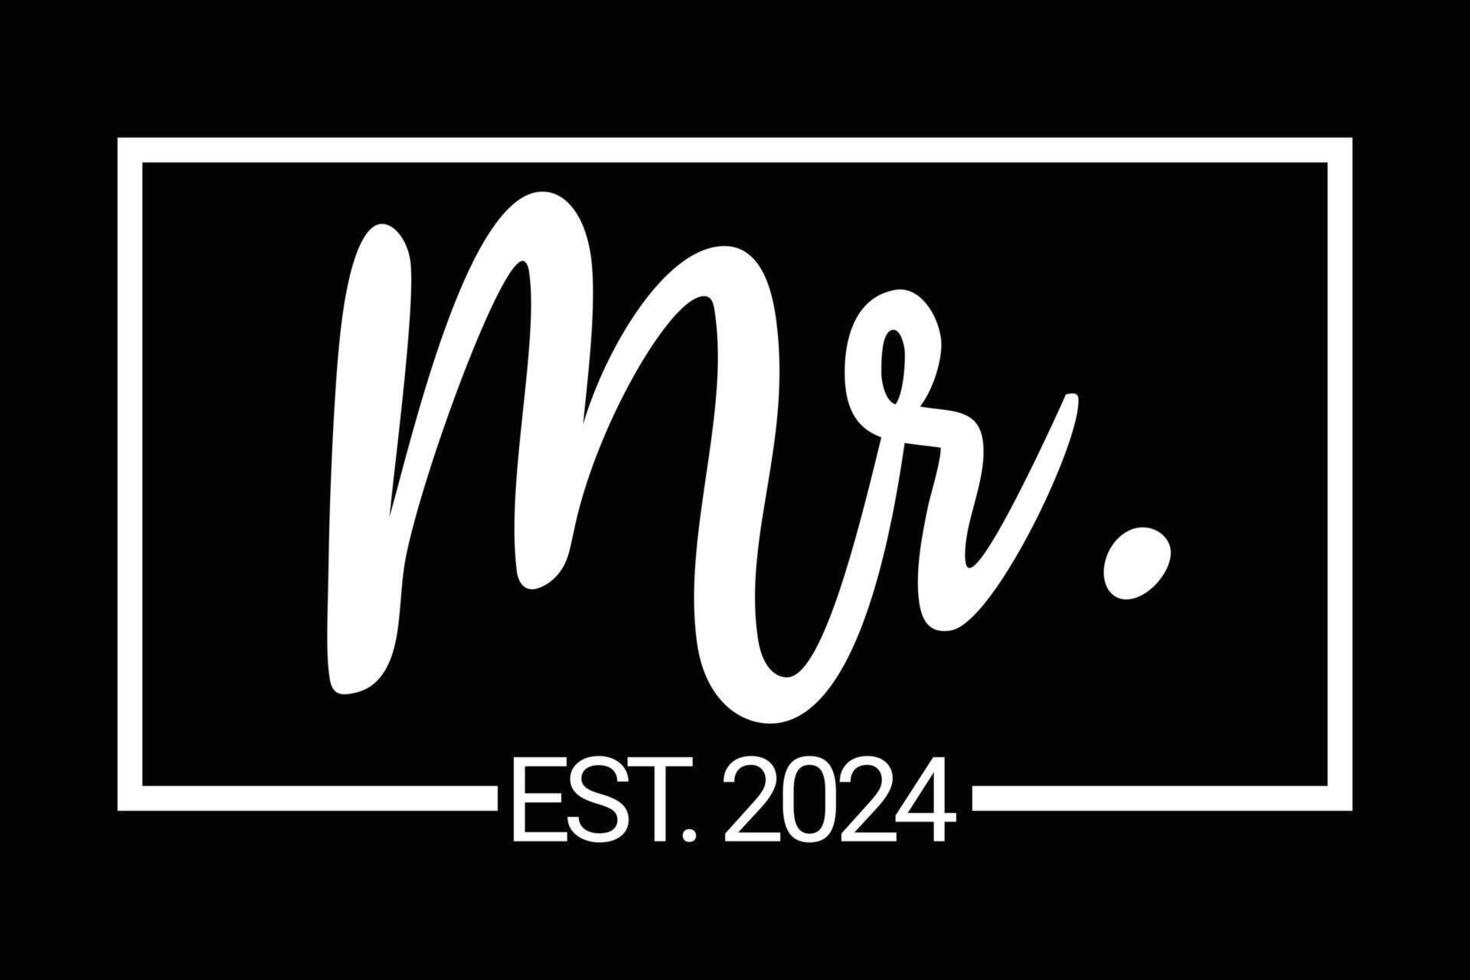 Sr Husa 2024 somente casado Casamento marido Sr e Sra camisa Projeto vetor